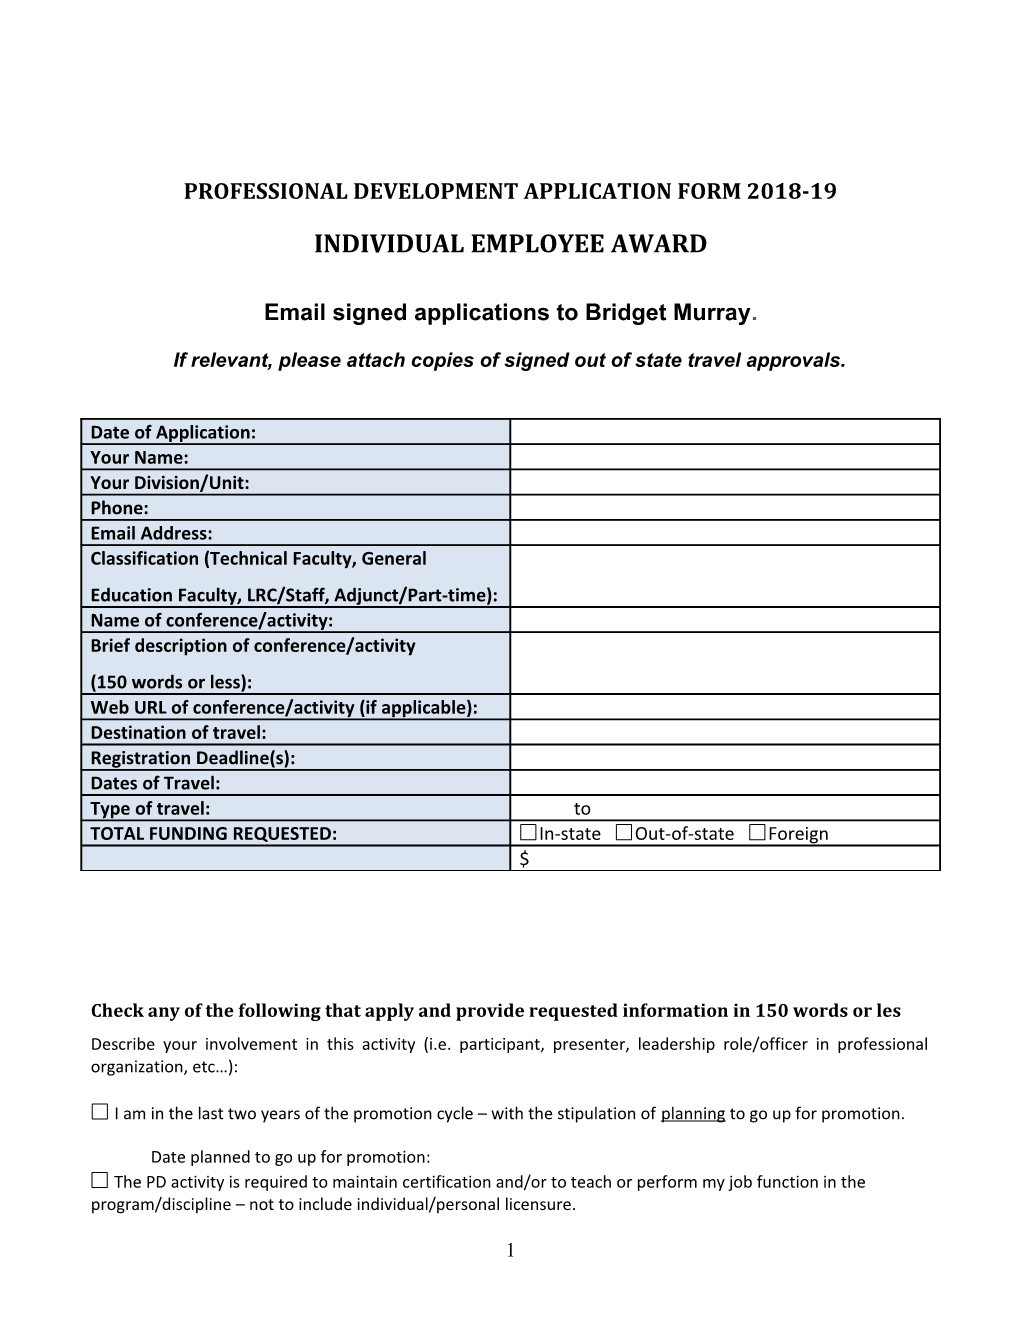 Professional Development Application Form 2018-19